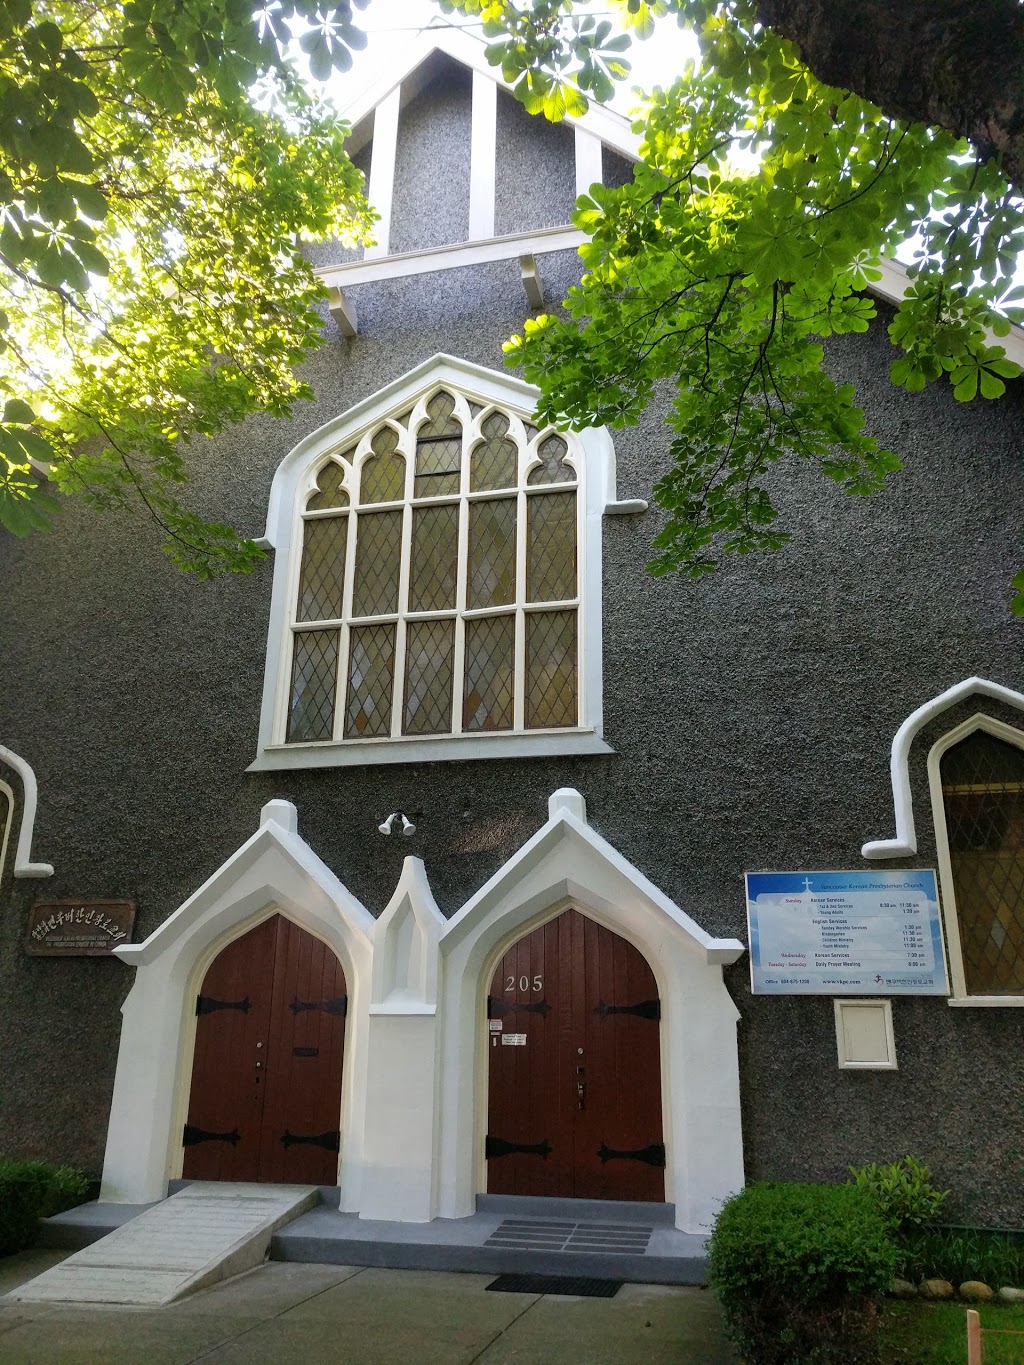 Vancouver Korean Presbyterian Church | church | 205 W 10th Ave, Vancouver, BC V5Y 1R9, Canada | 6048751200 OR +1 604-875-1200